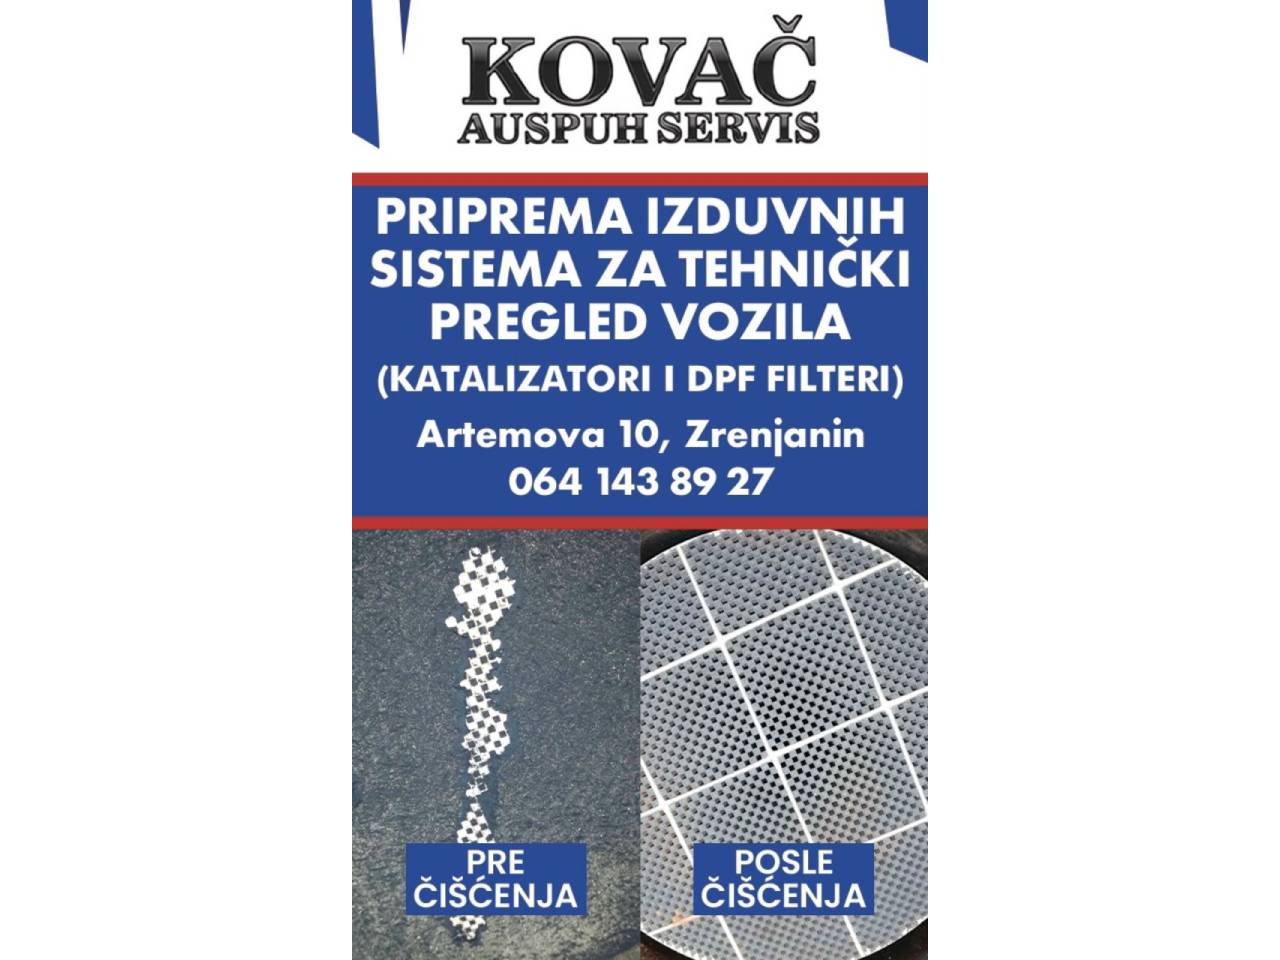 Photo 1 - EXHAUST PIPE SERVICE KOVAC - Auto services, Zrenjanin